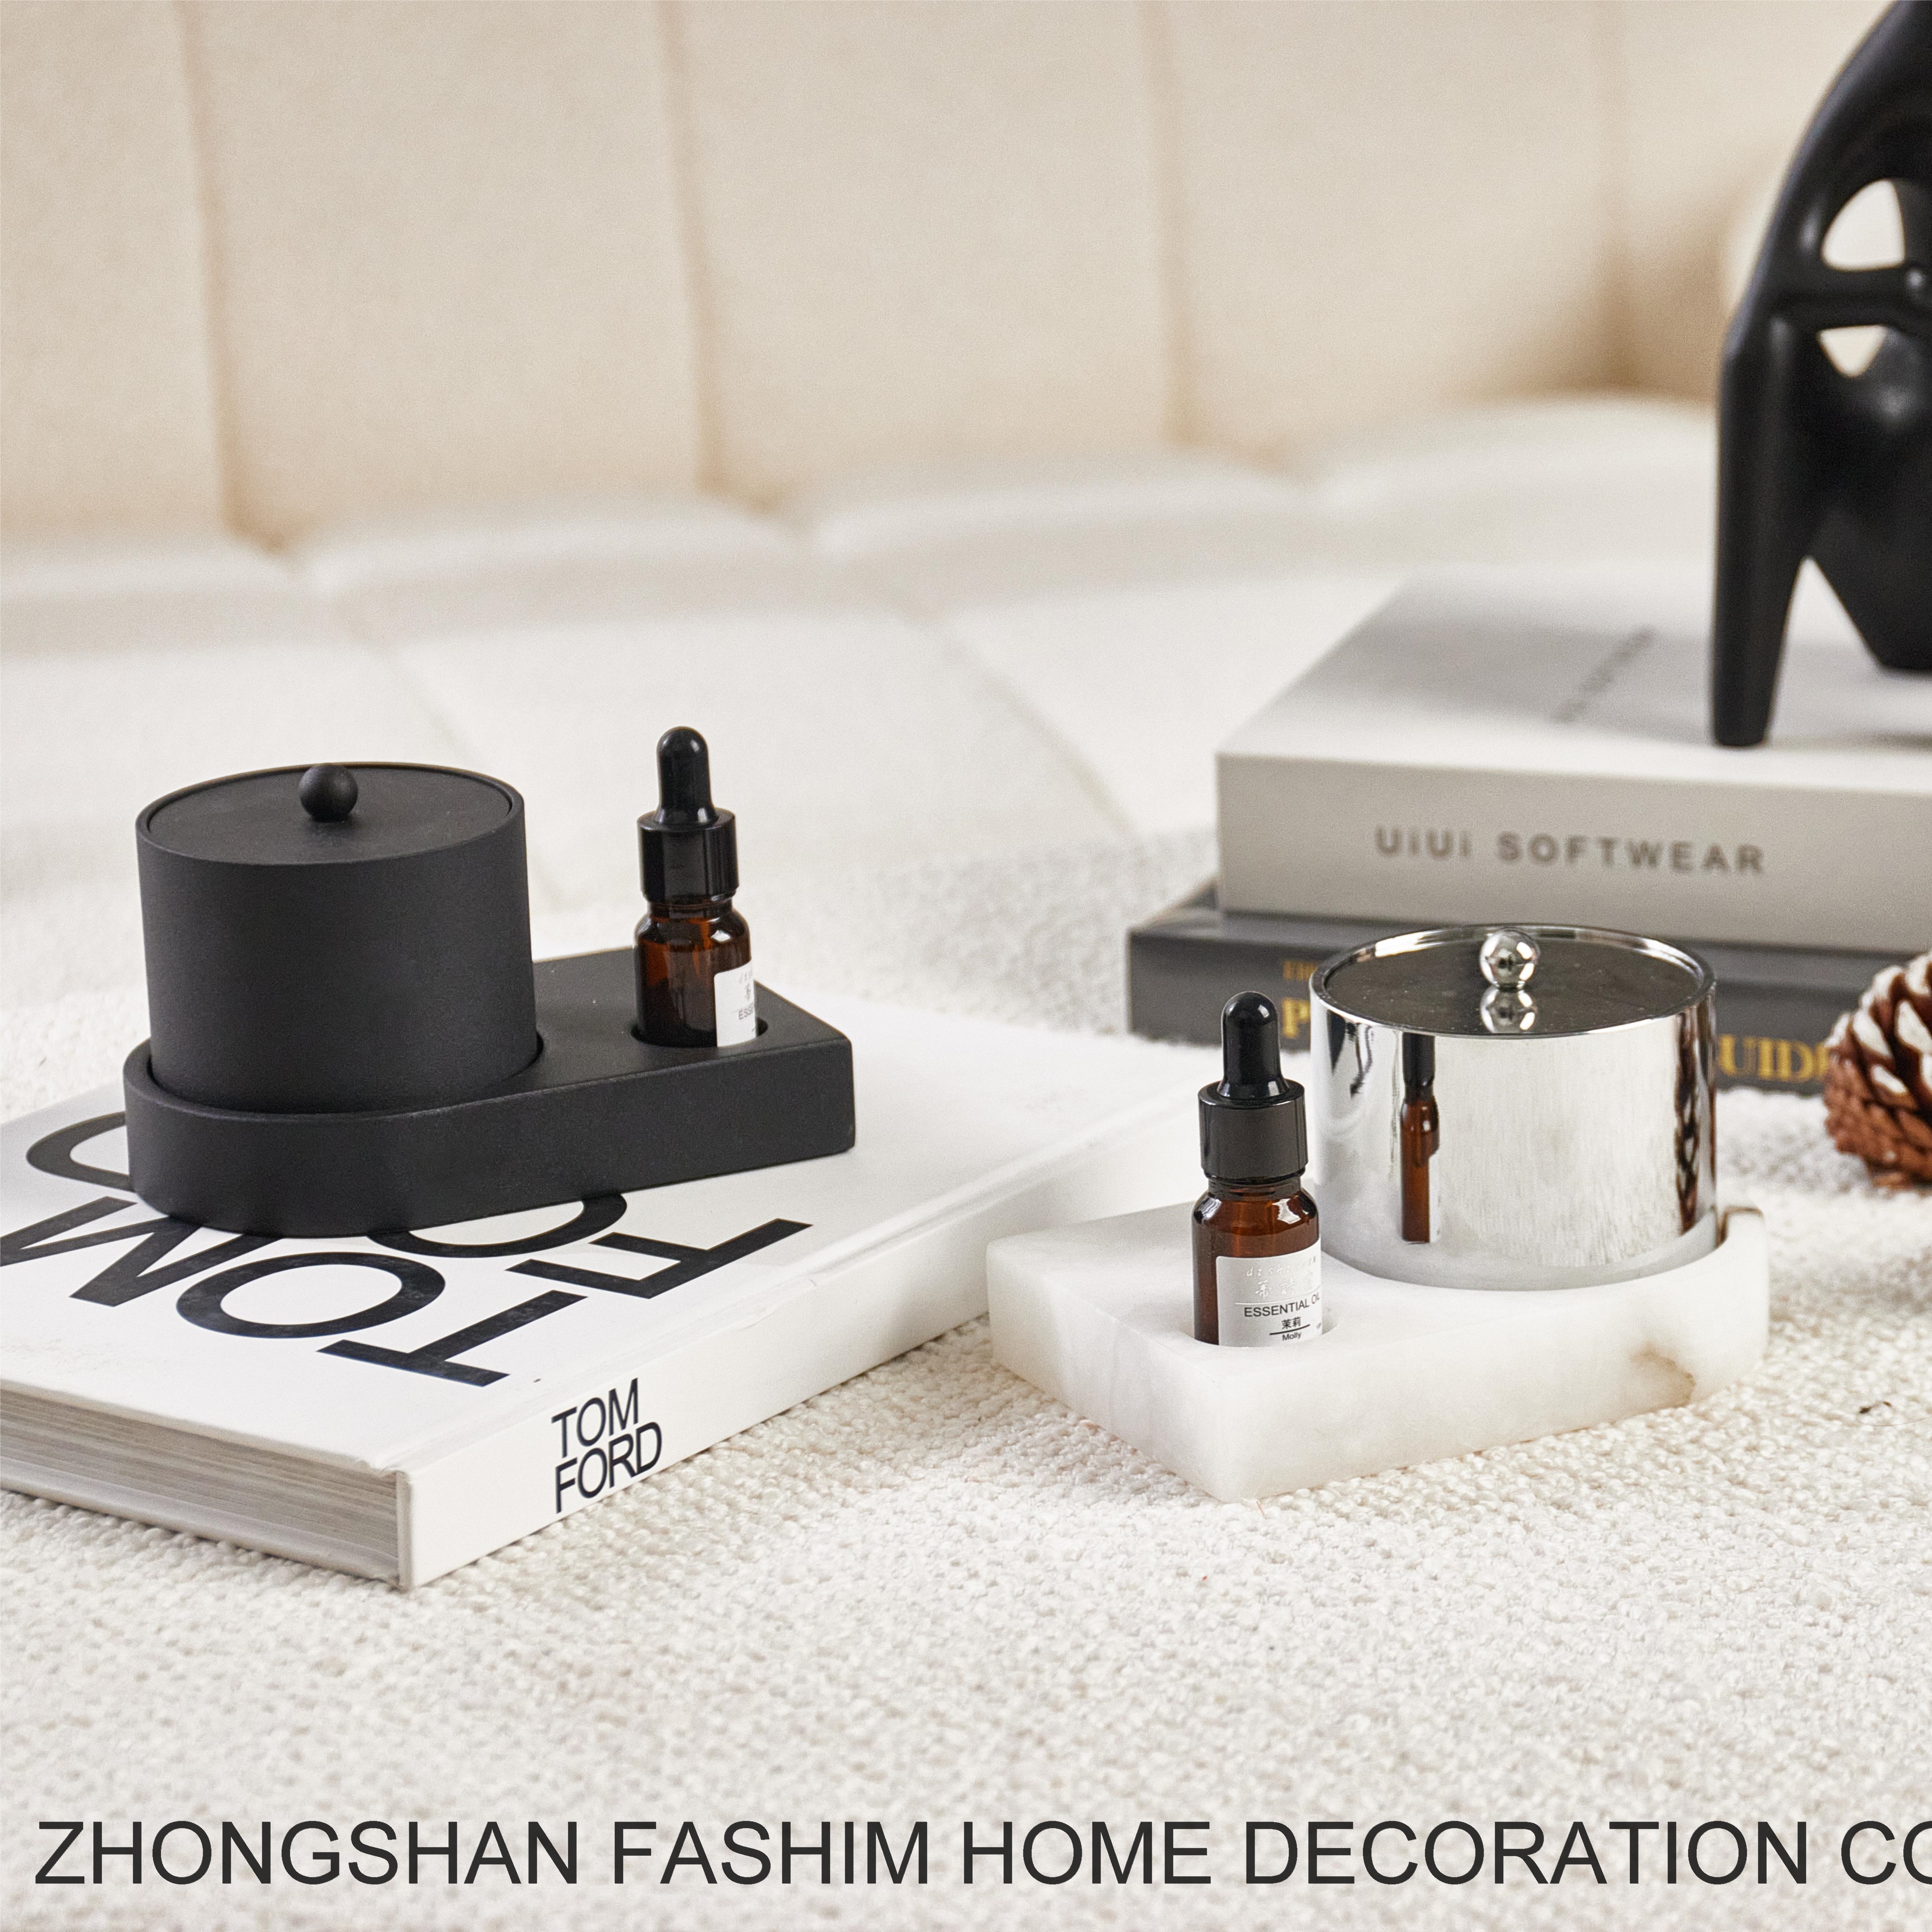 Fashimdecor modern home decoration aromatherapy decor